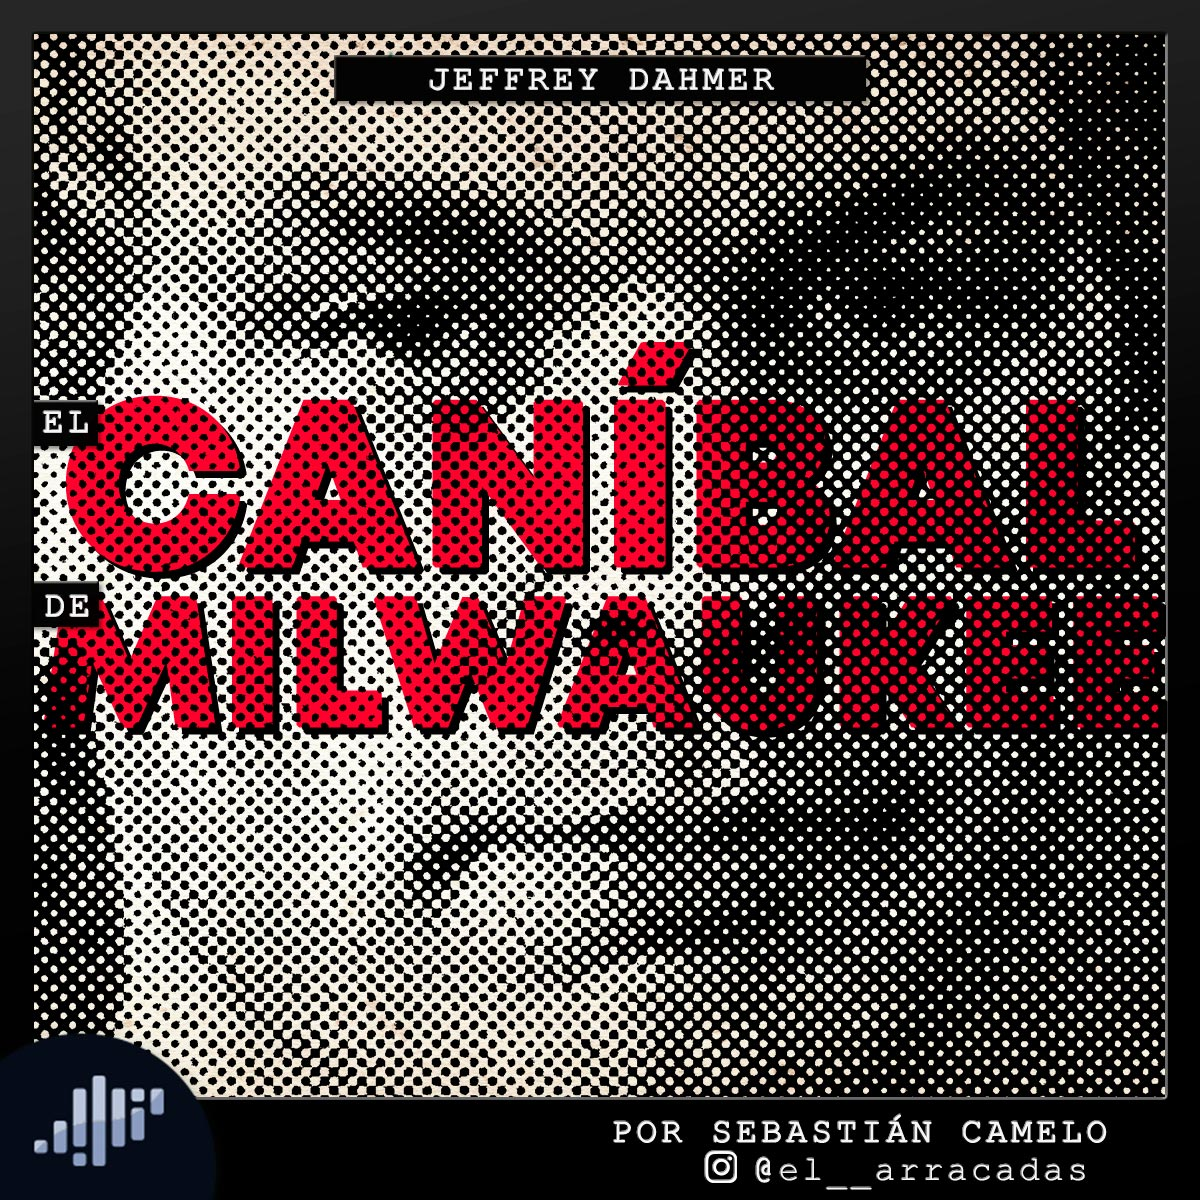 Jeffrey Dahmer "Caníbal de Milwaukee"